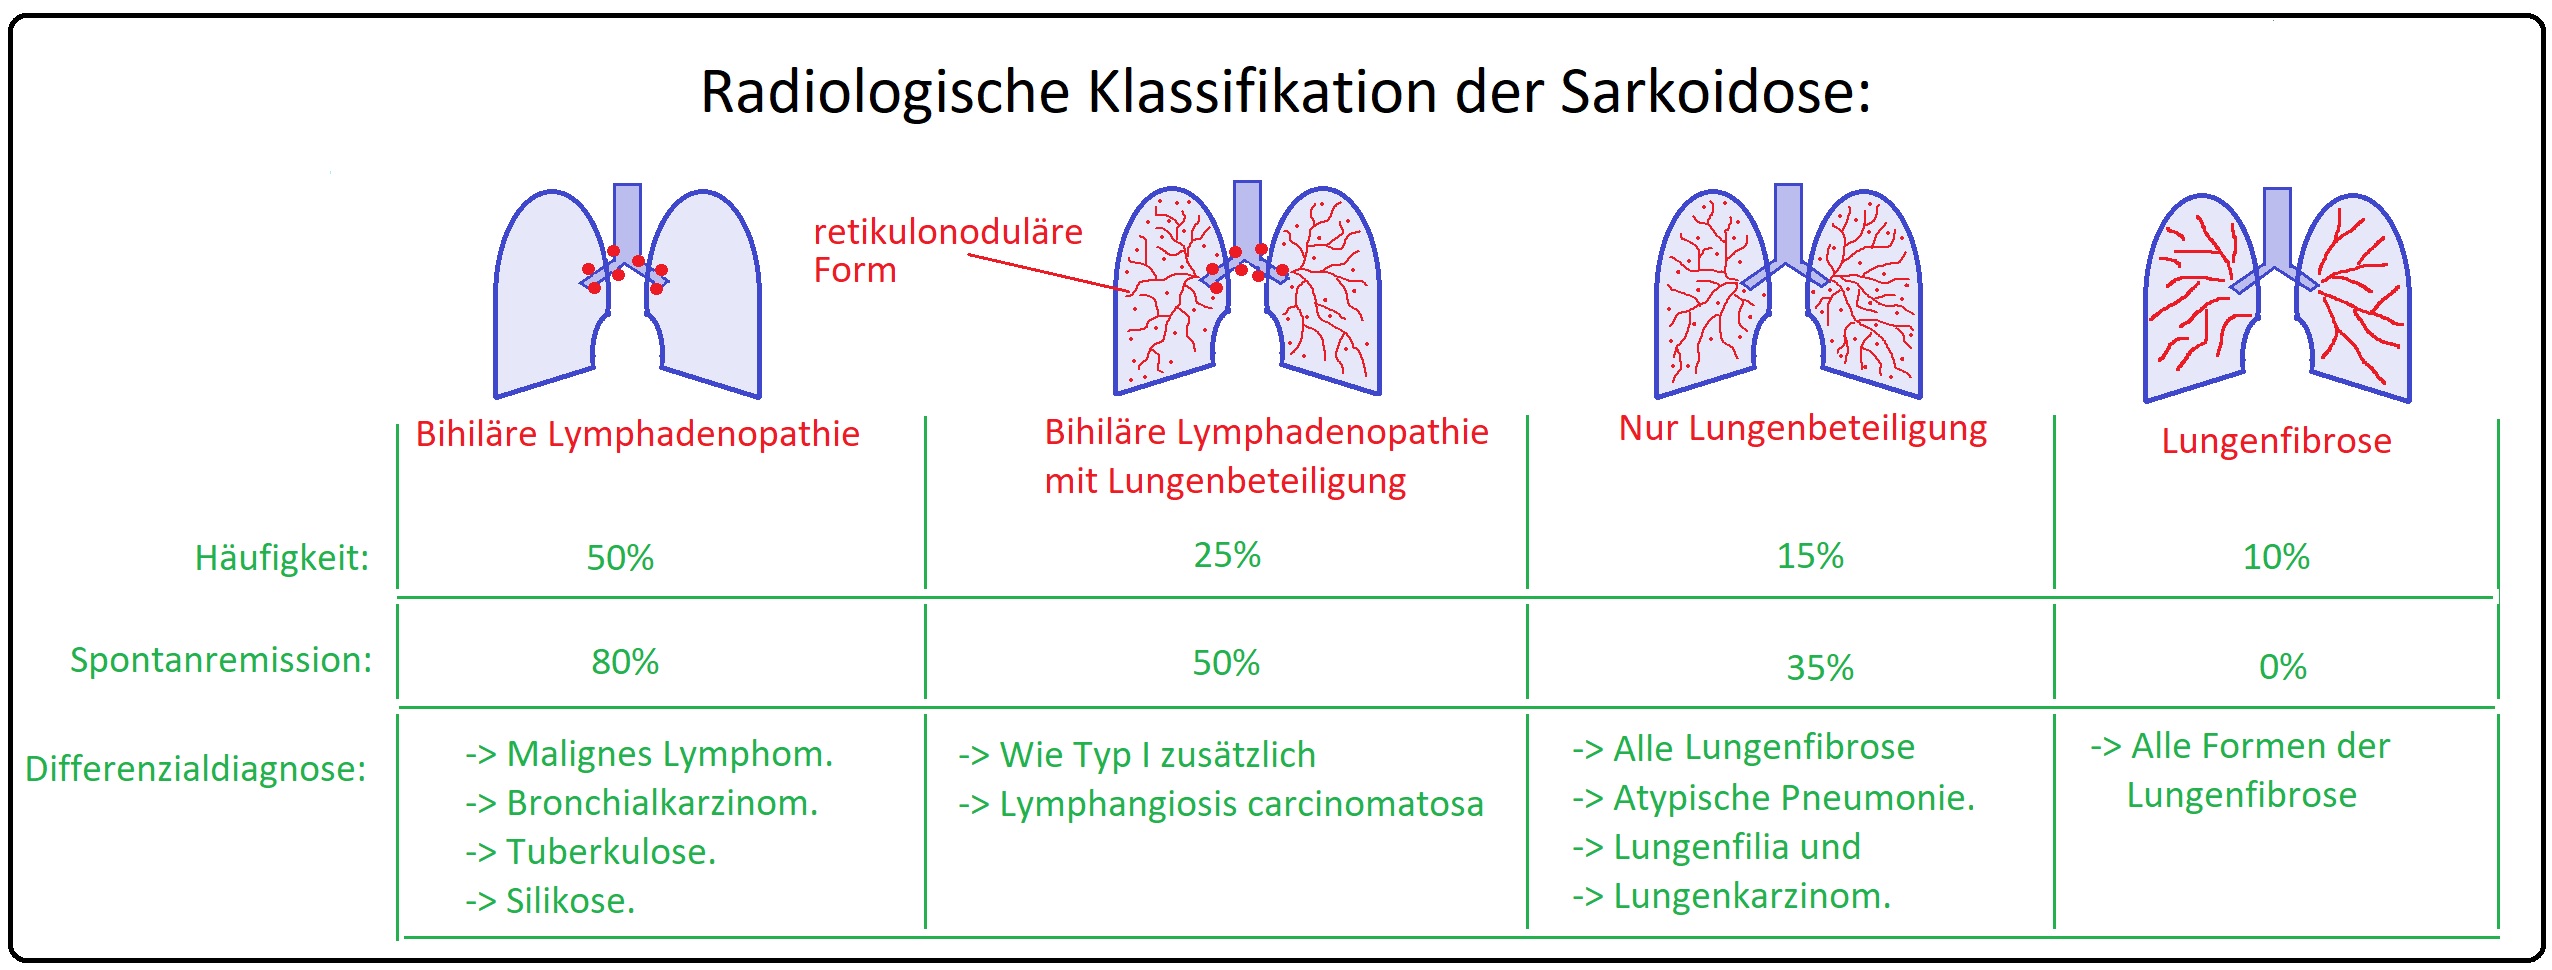 401 Radiologische Klassifikation der Sarkoidose